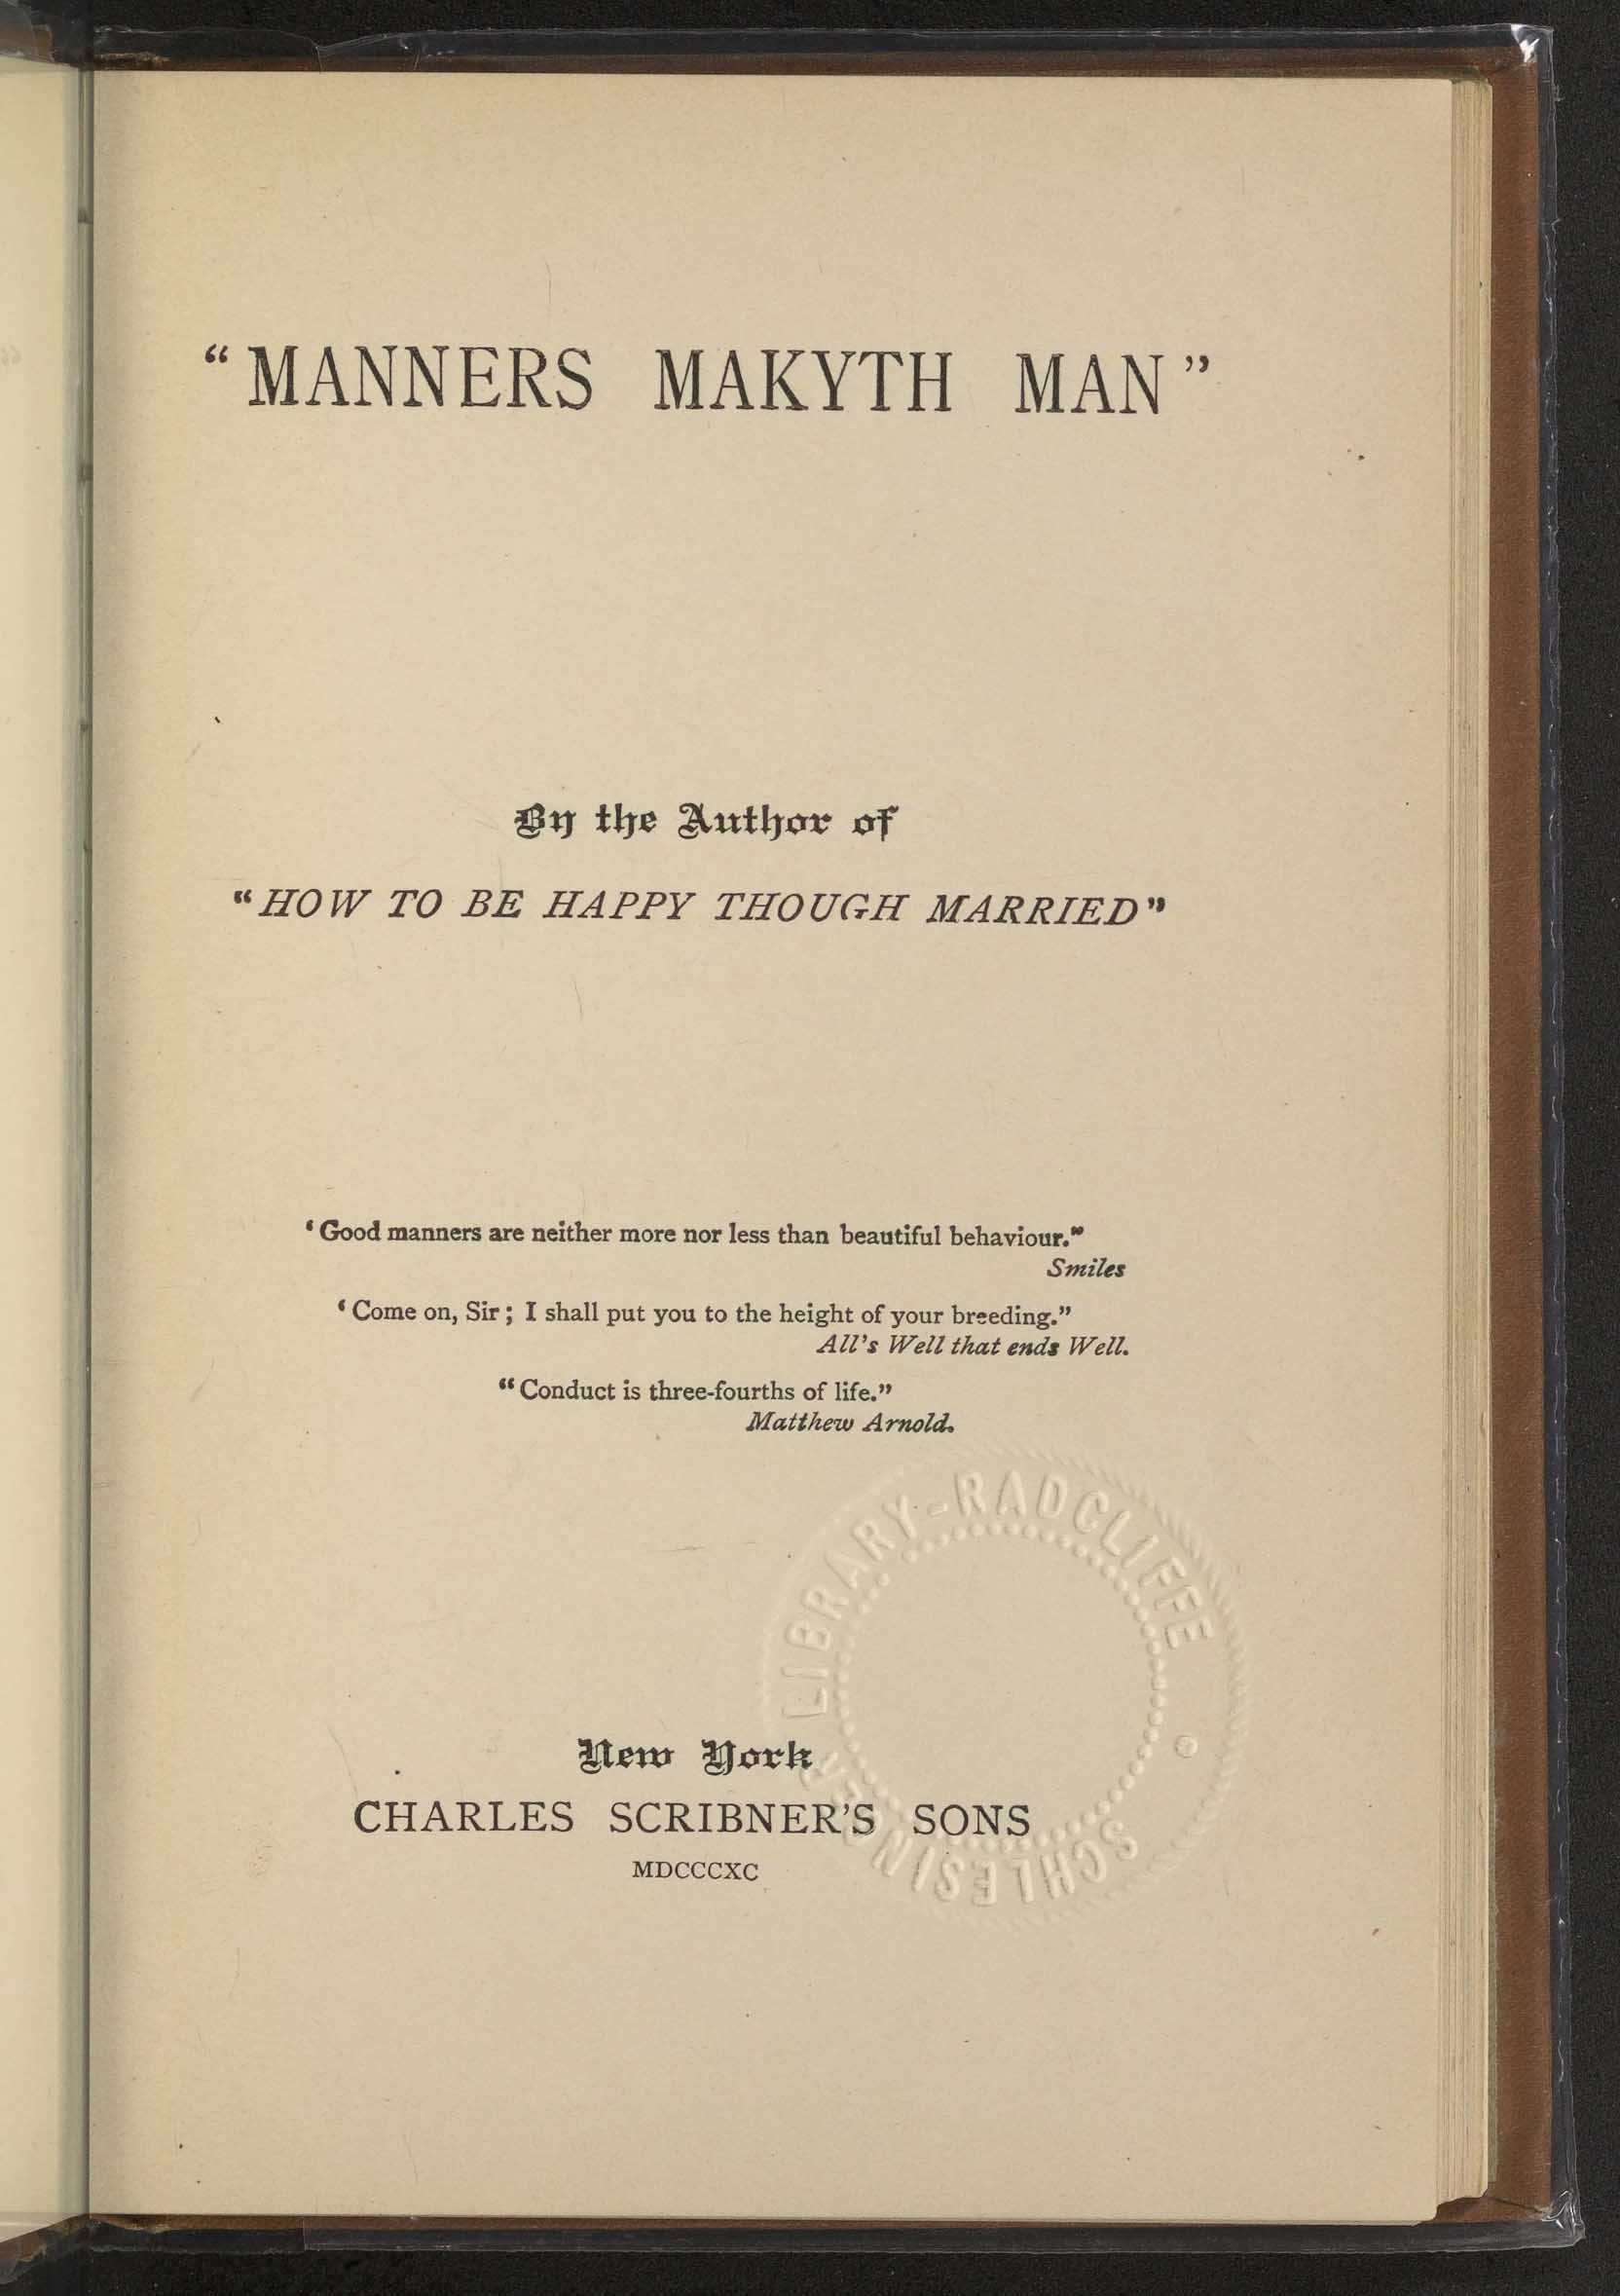 "Manners Makyth Man"